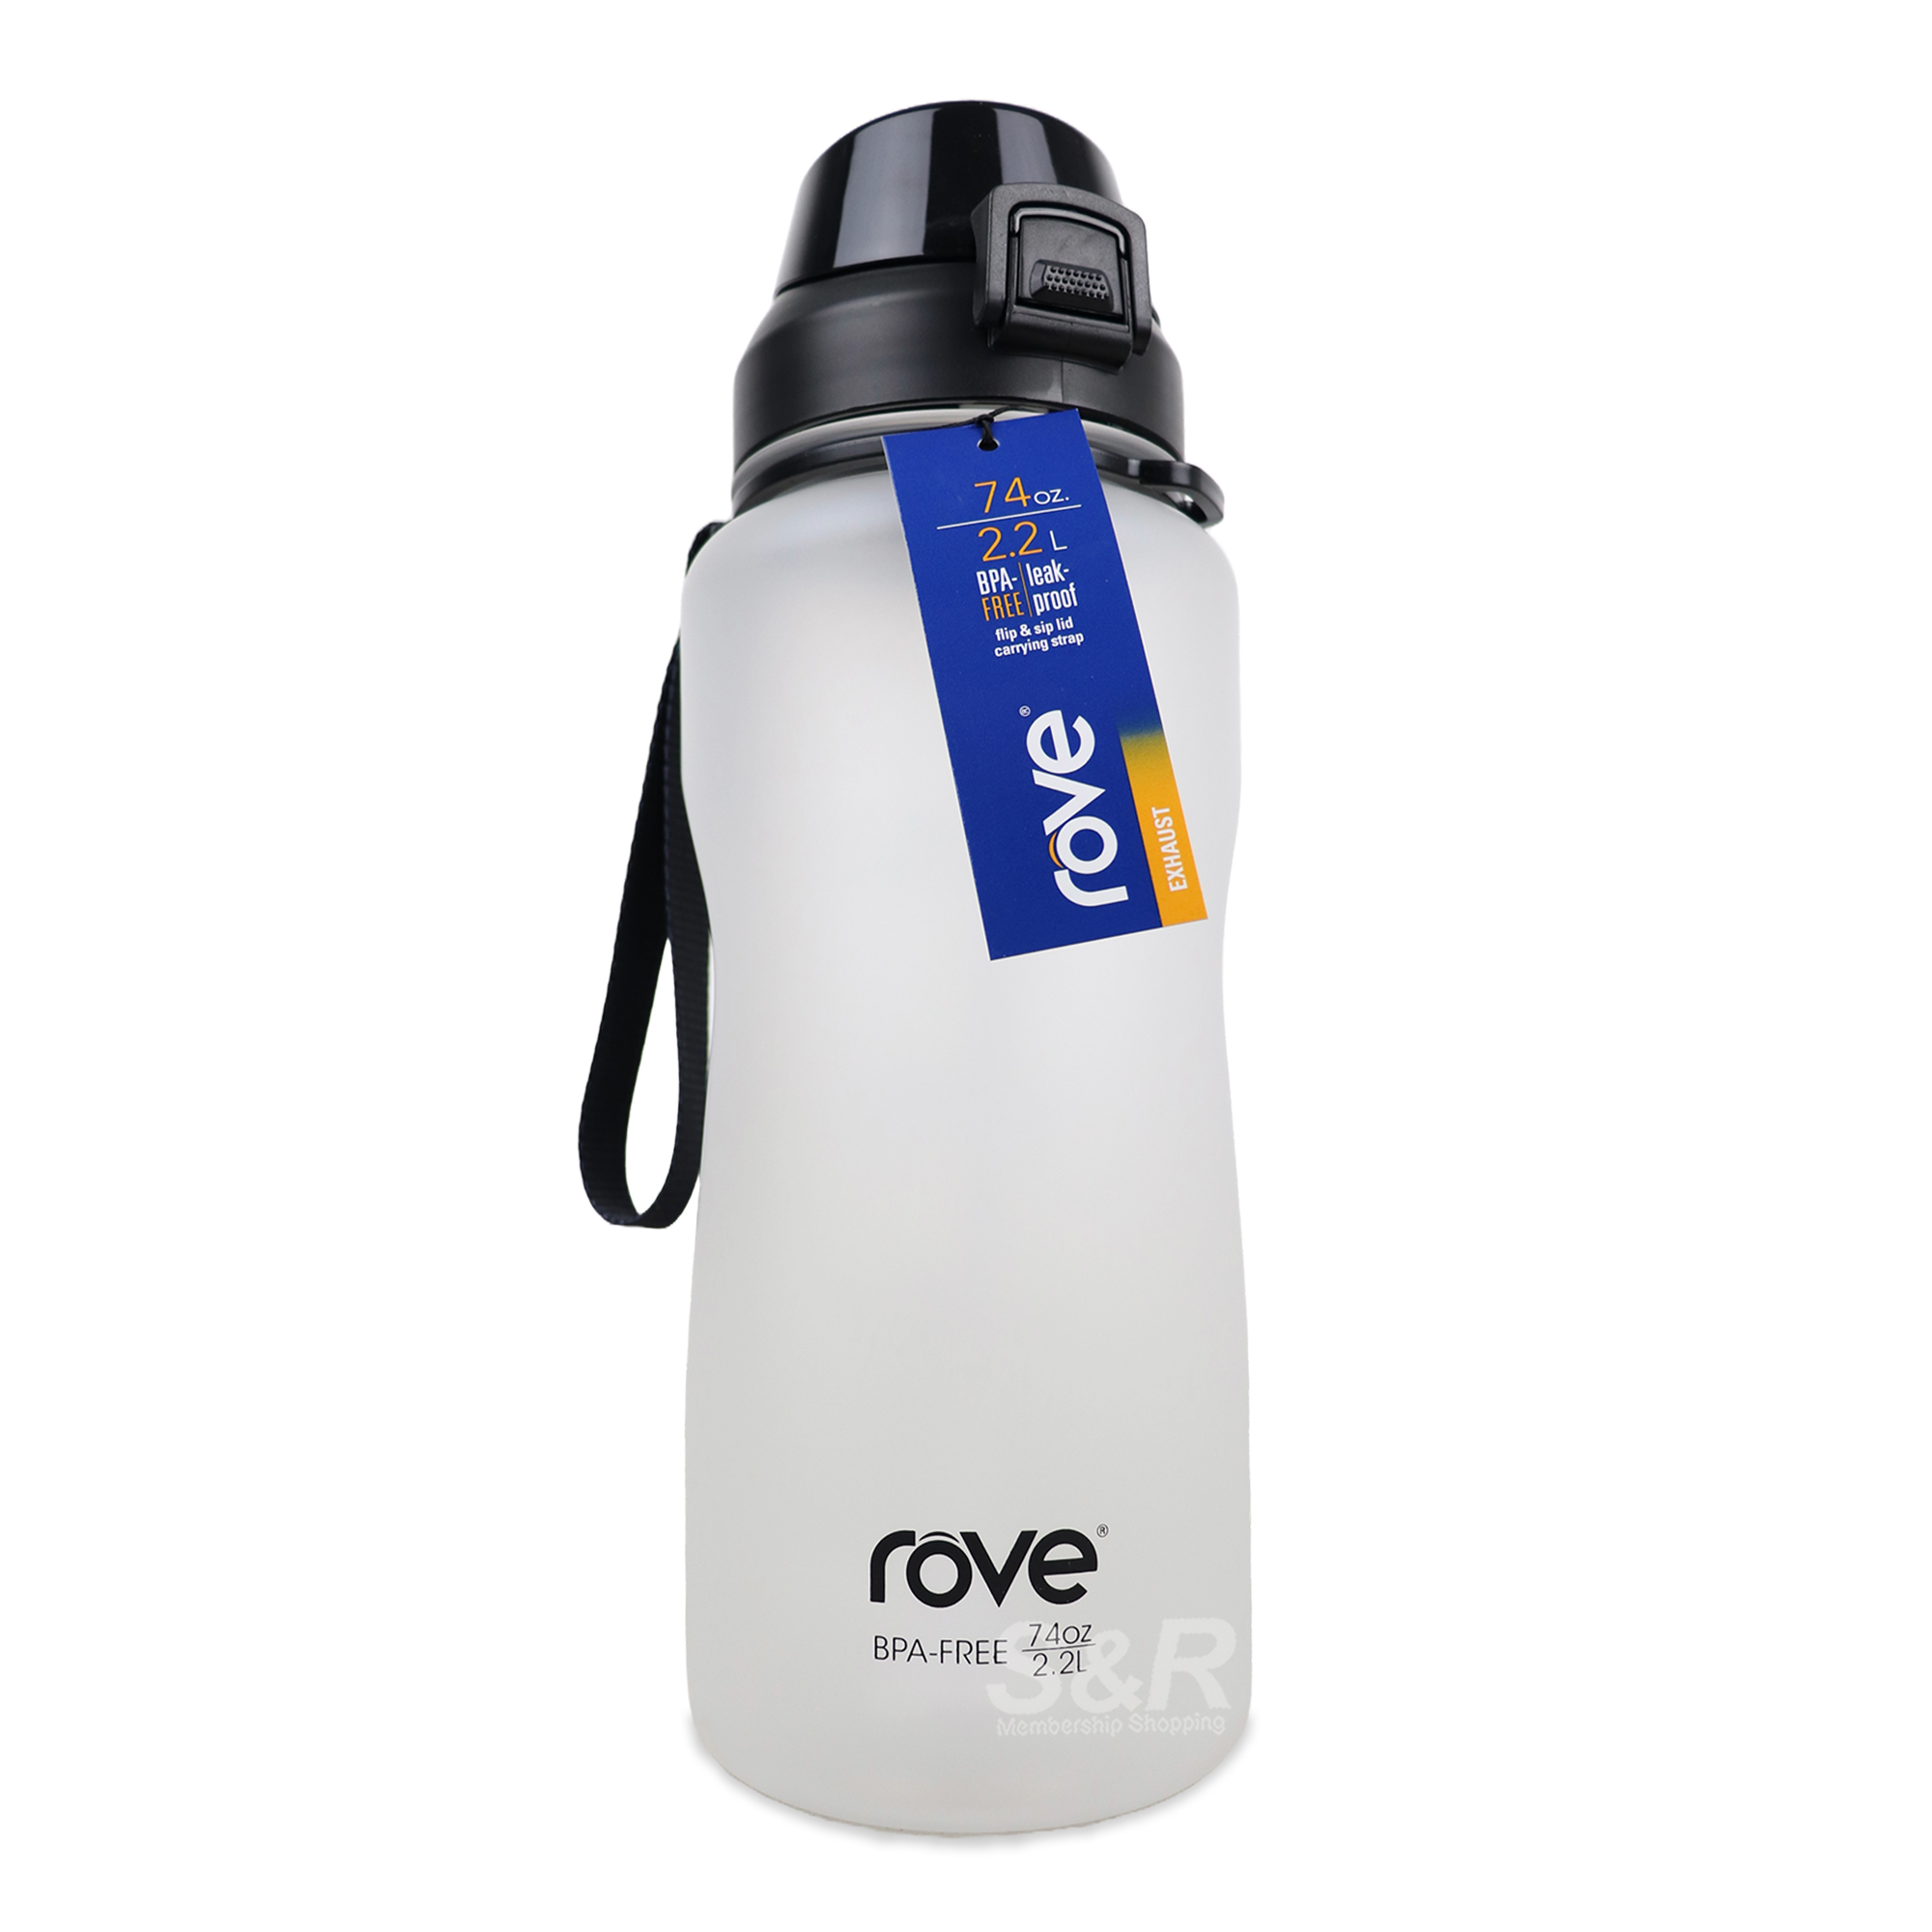 Rove Water Bottle White 2.2L